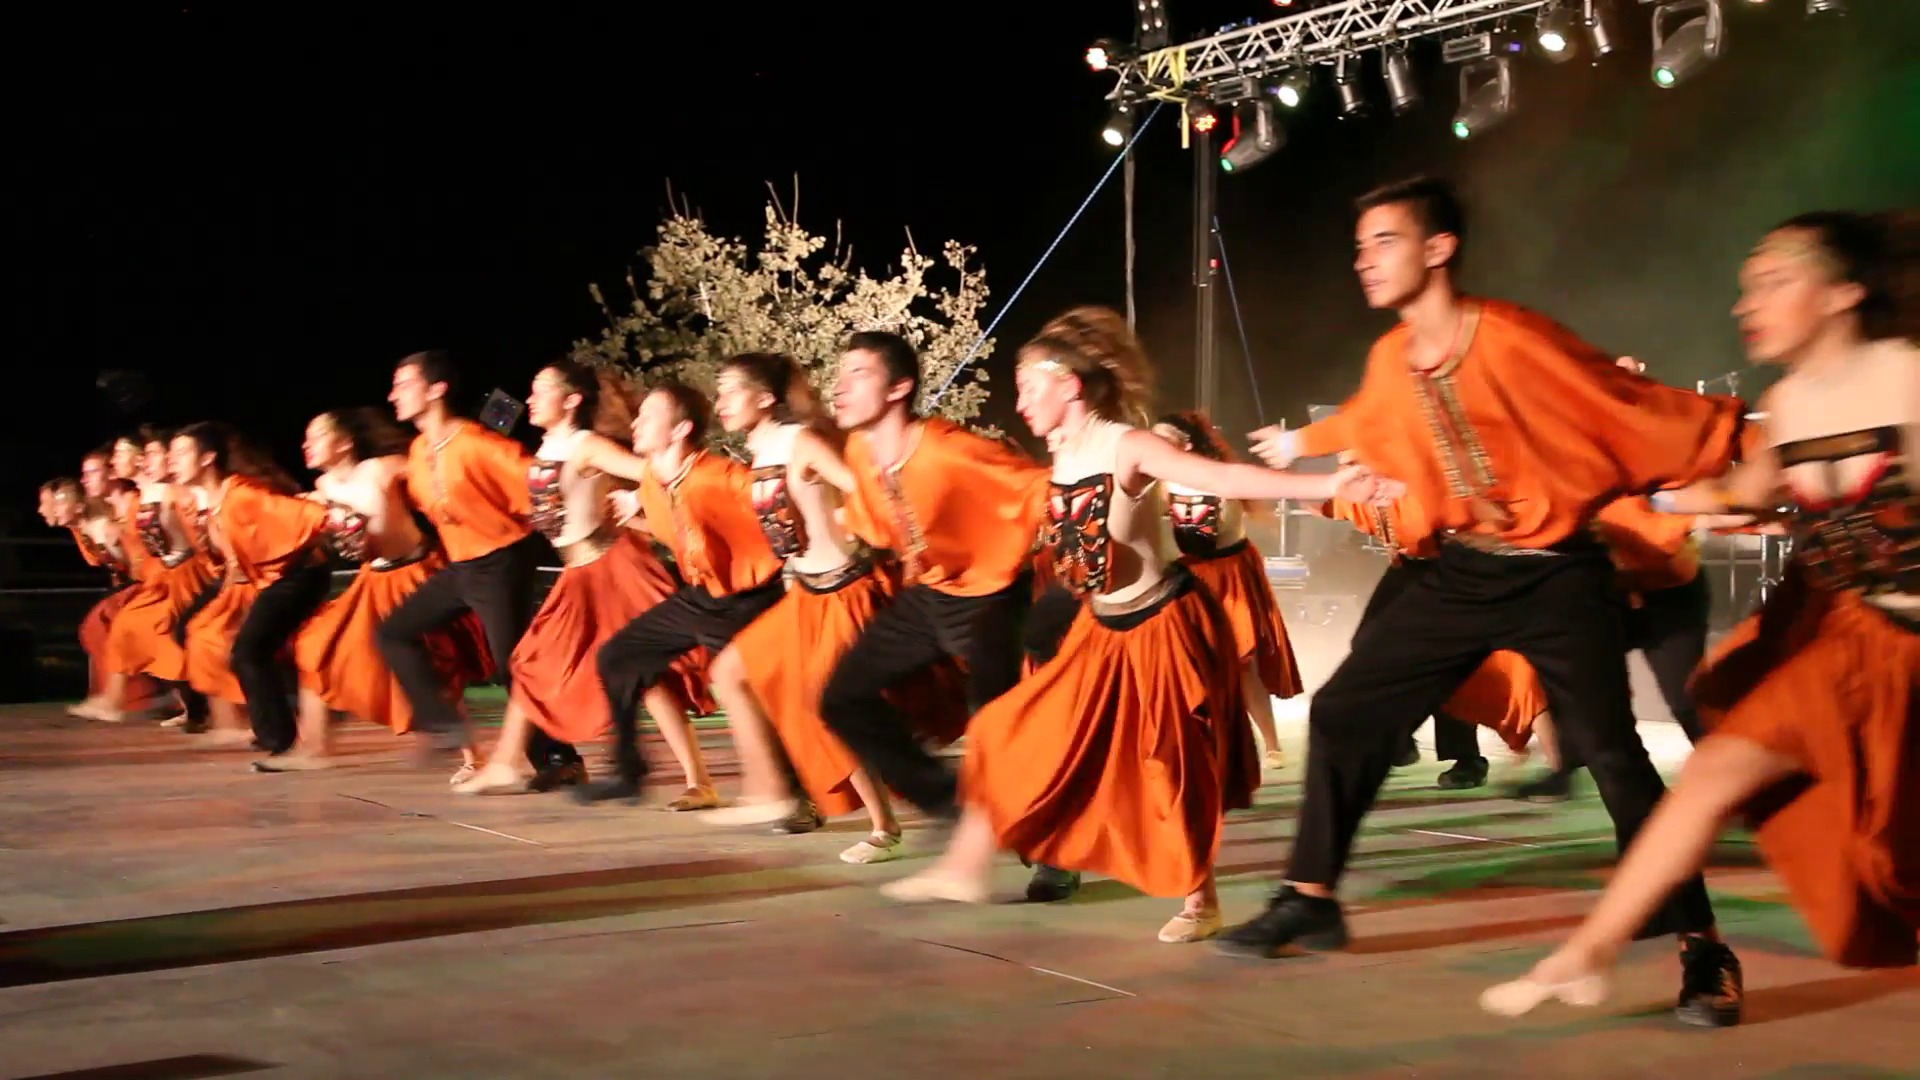 Israeli Folk Dancing at Templ